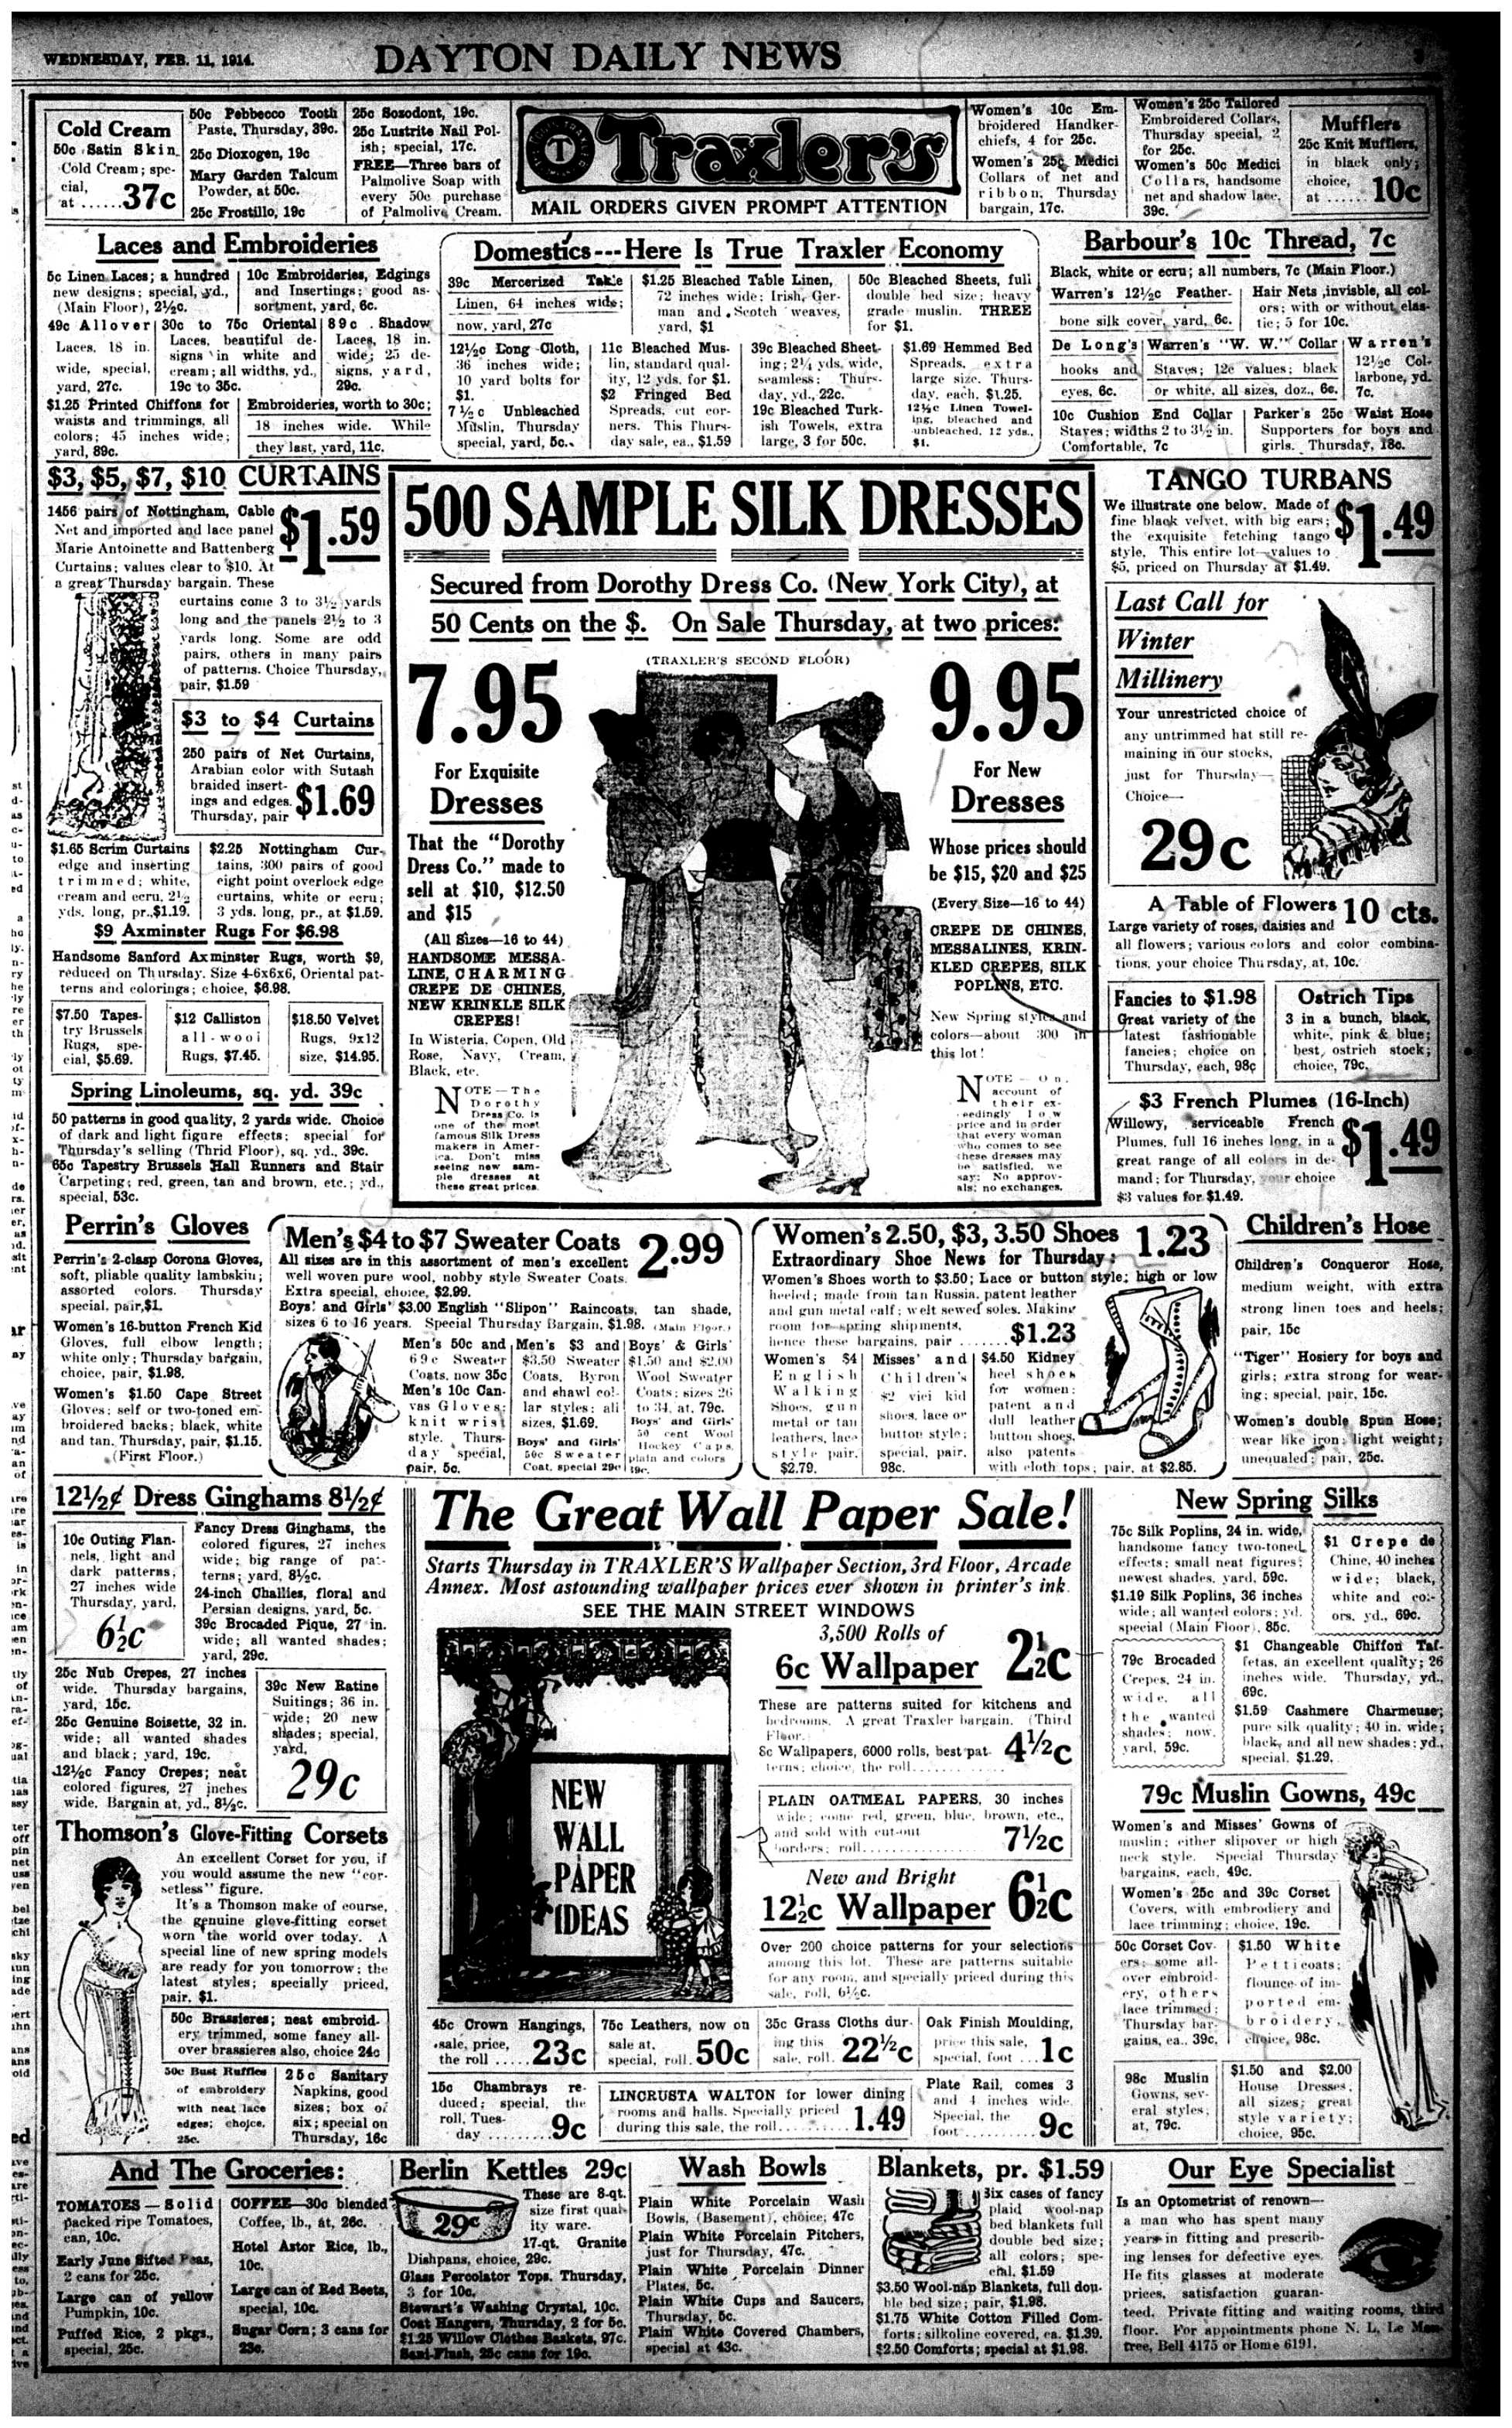 Ad for Traxler's, DDN, Feb. 11, 1914